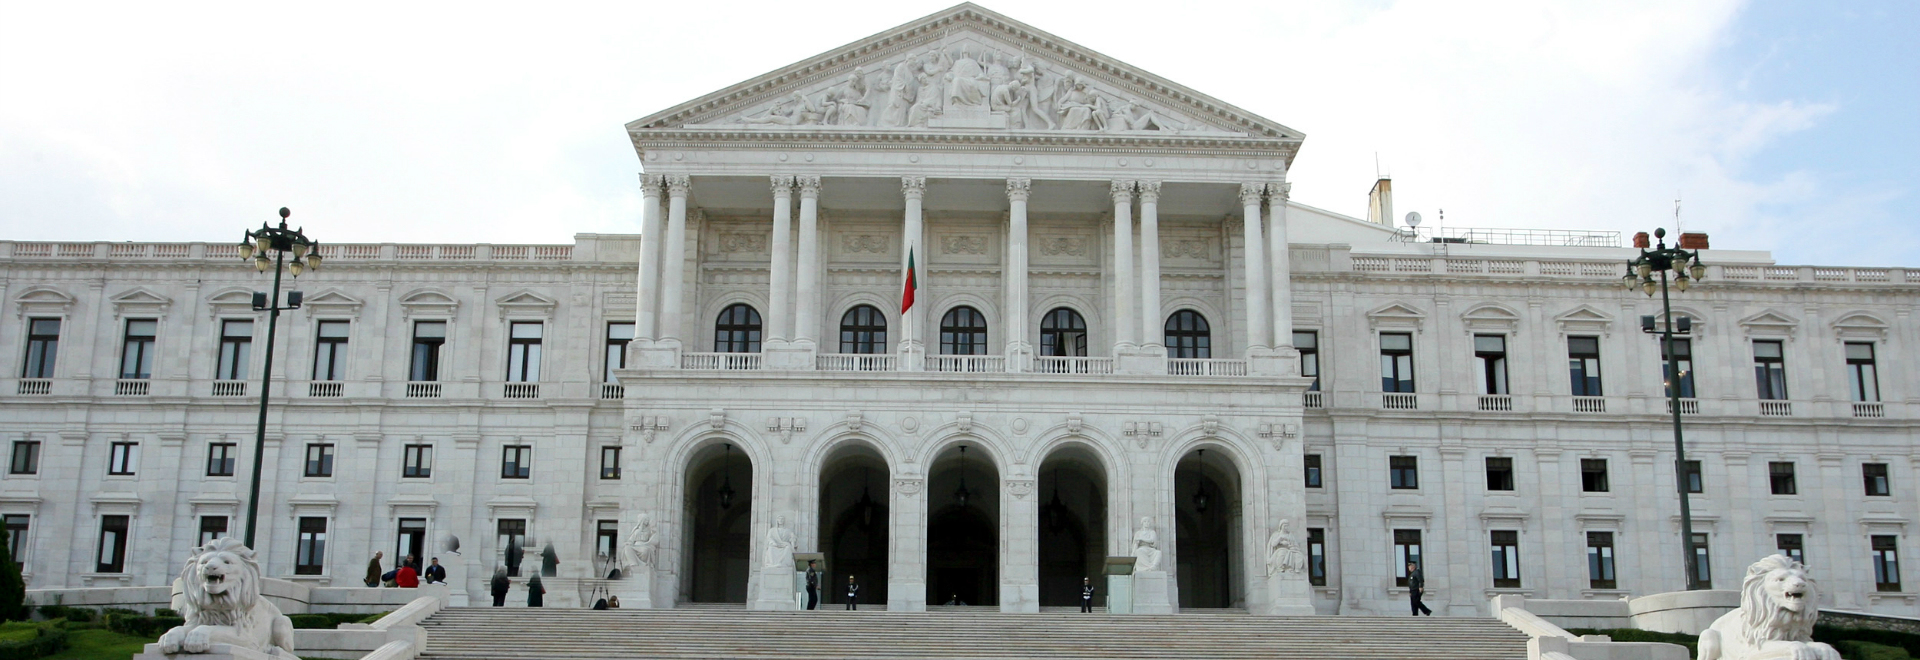 Sao Bento Palace Lisboa Portugal